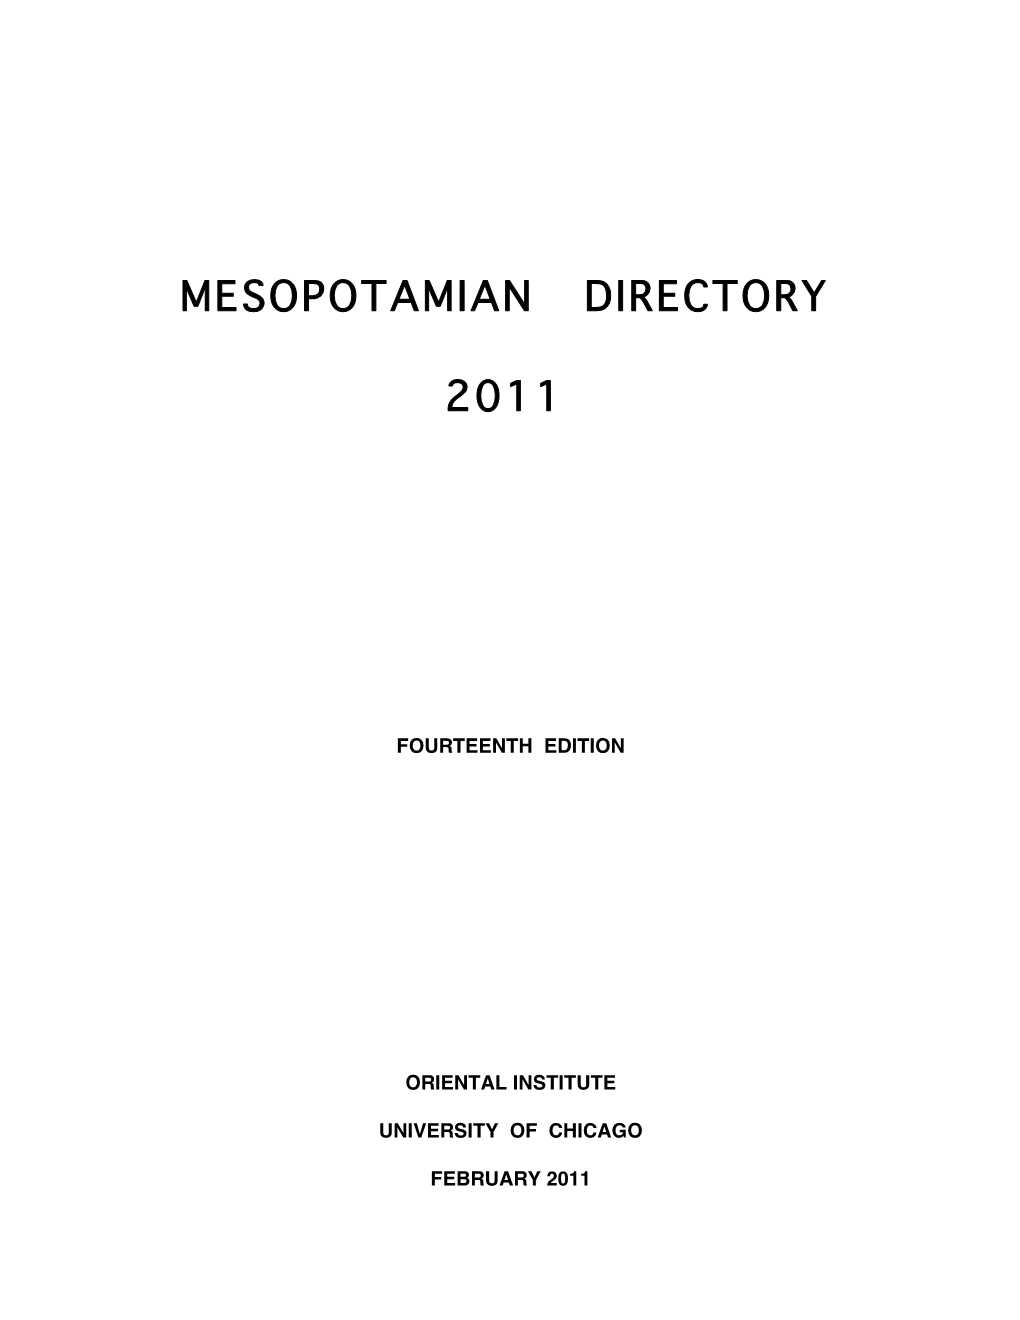 Mesopotamian Directory